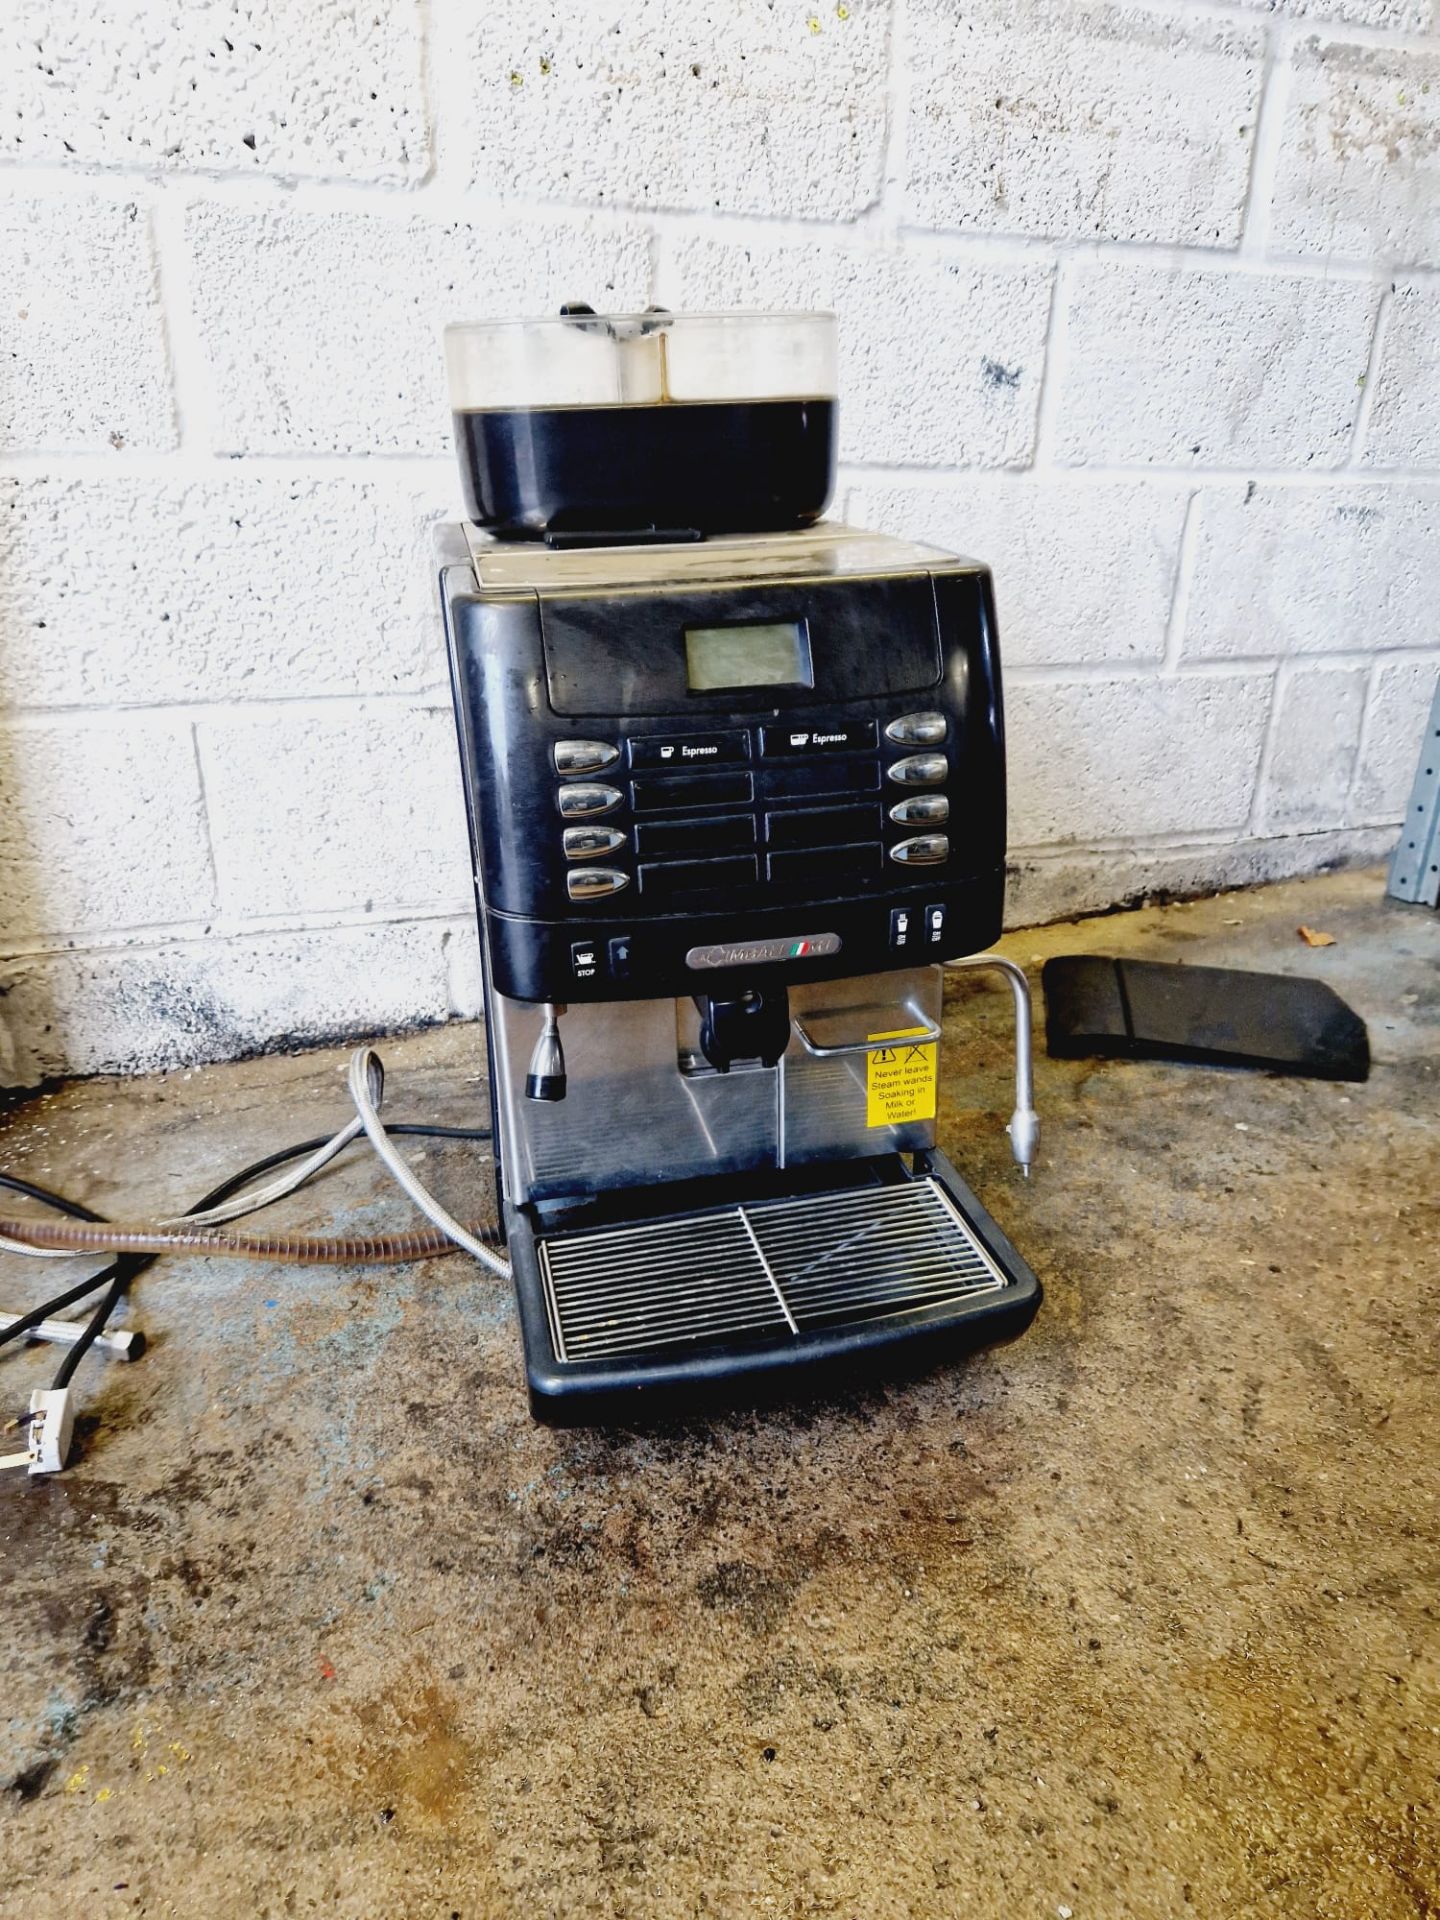 LACIMBALI M1 AUTOMATIC COFFEE MACHINE - UNTESTED